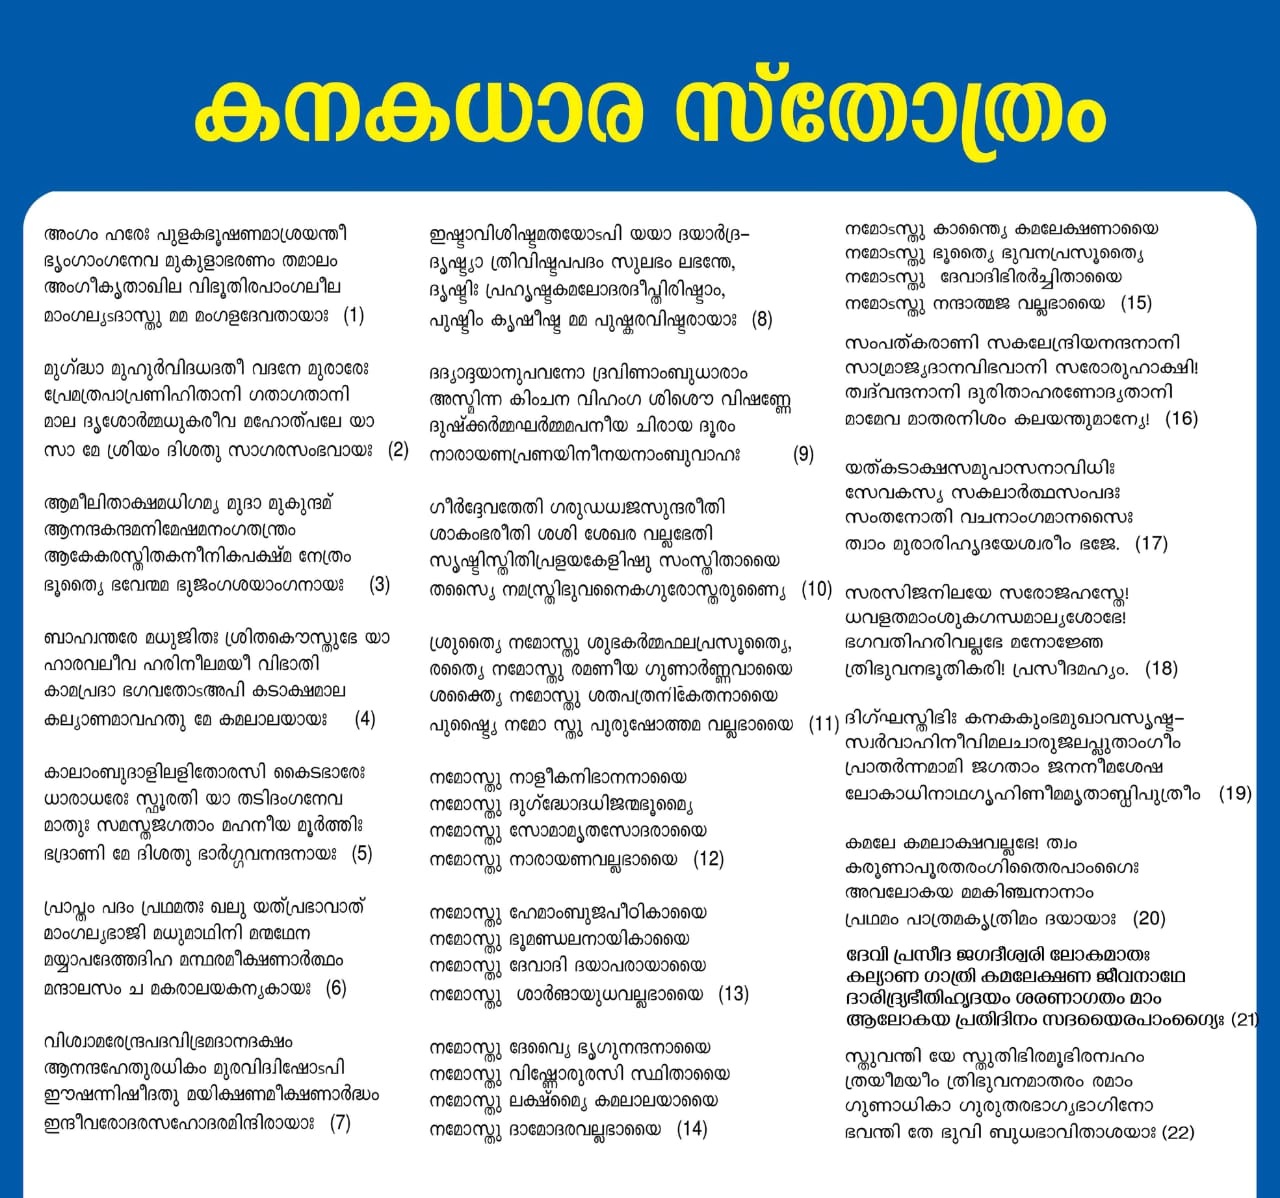 aigiri nandini lyrics in malayalam pdf